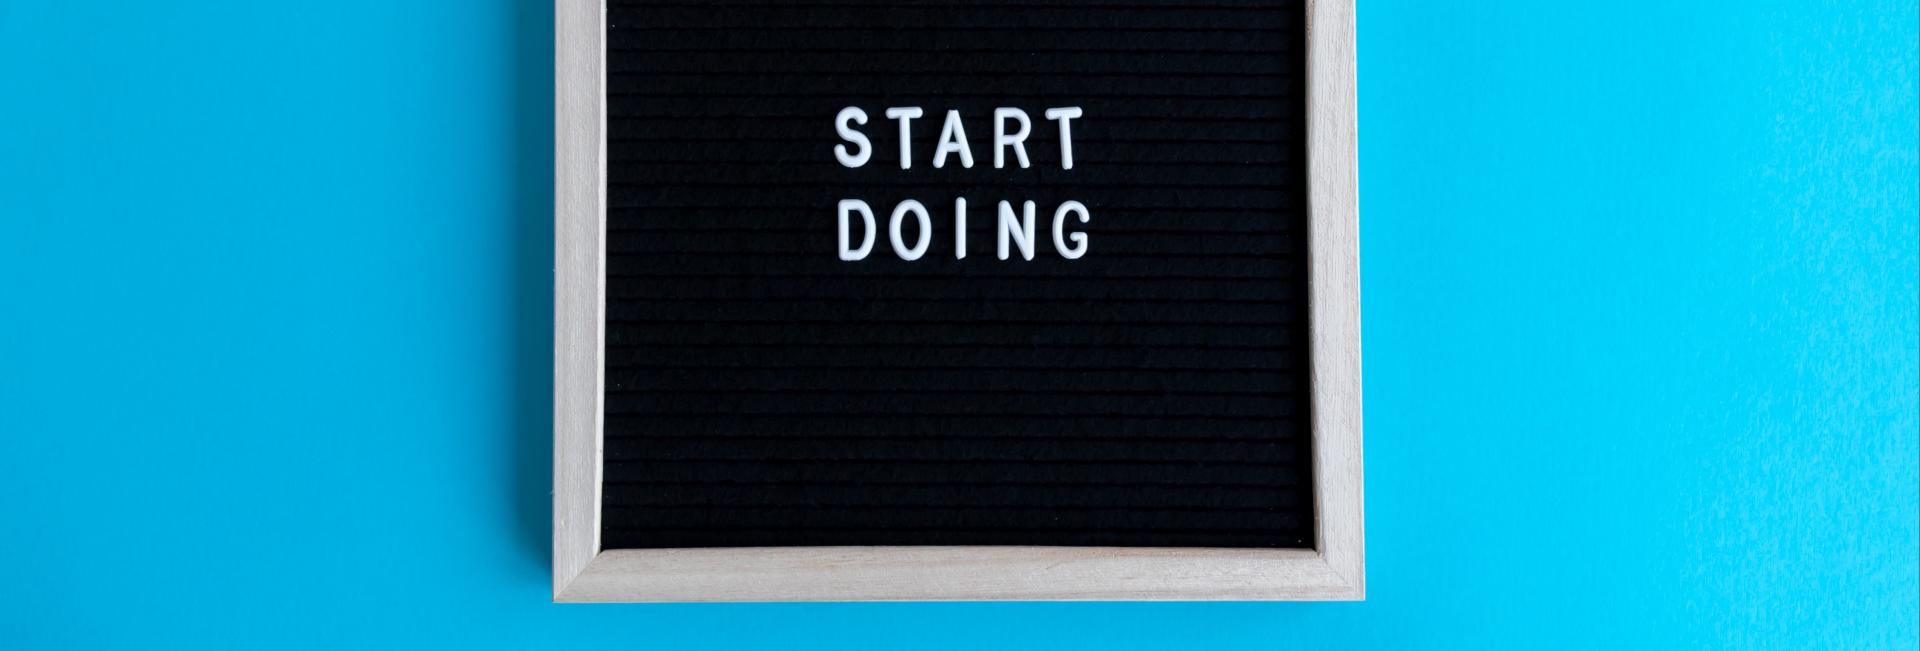 Tablero en el que se lee "Start doing"